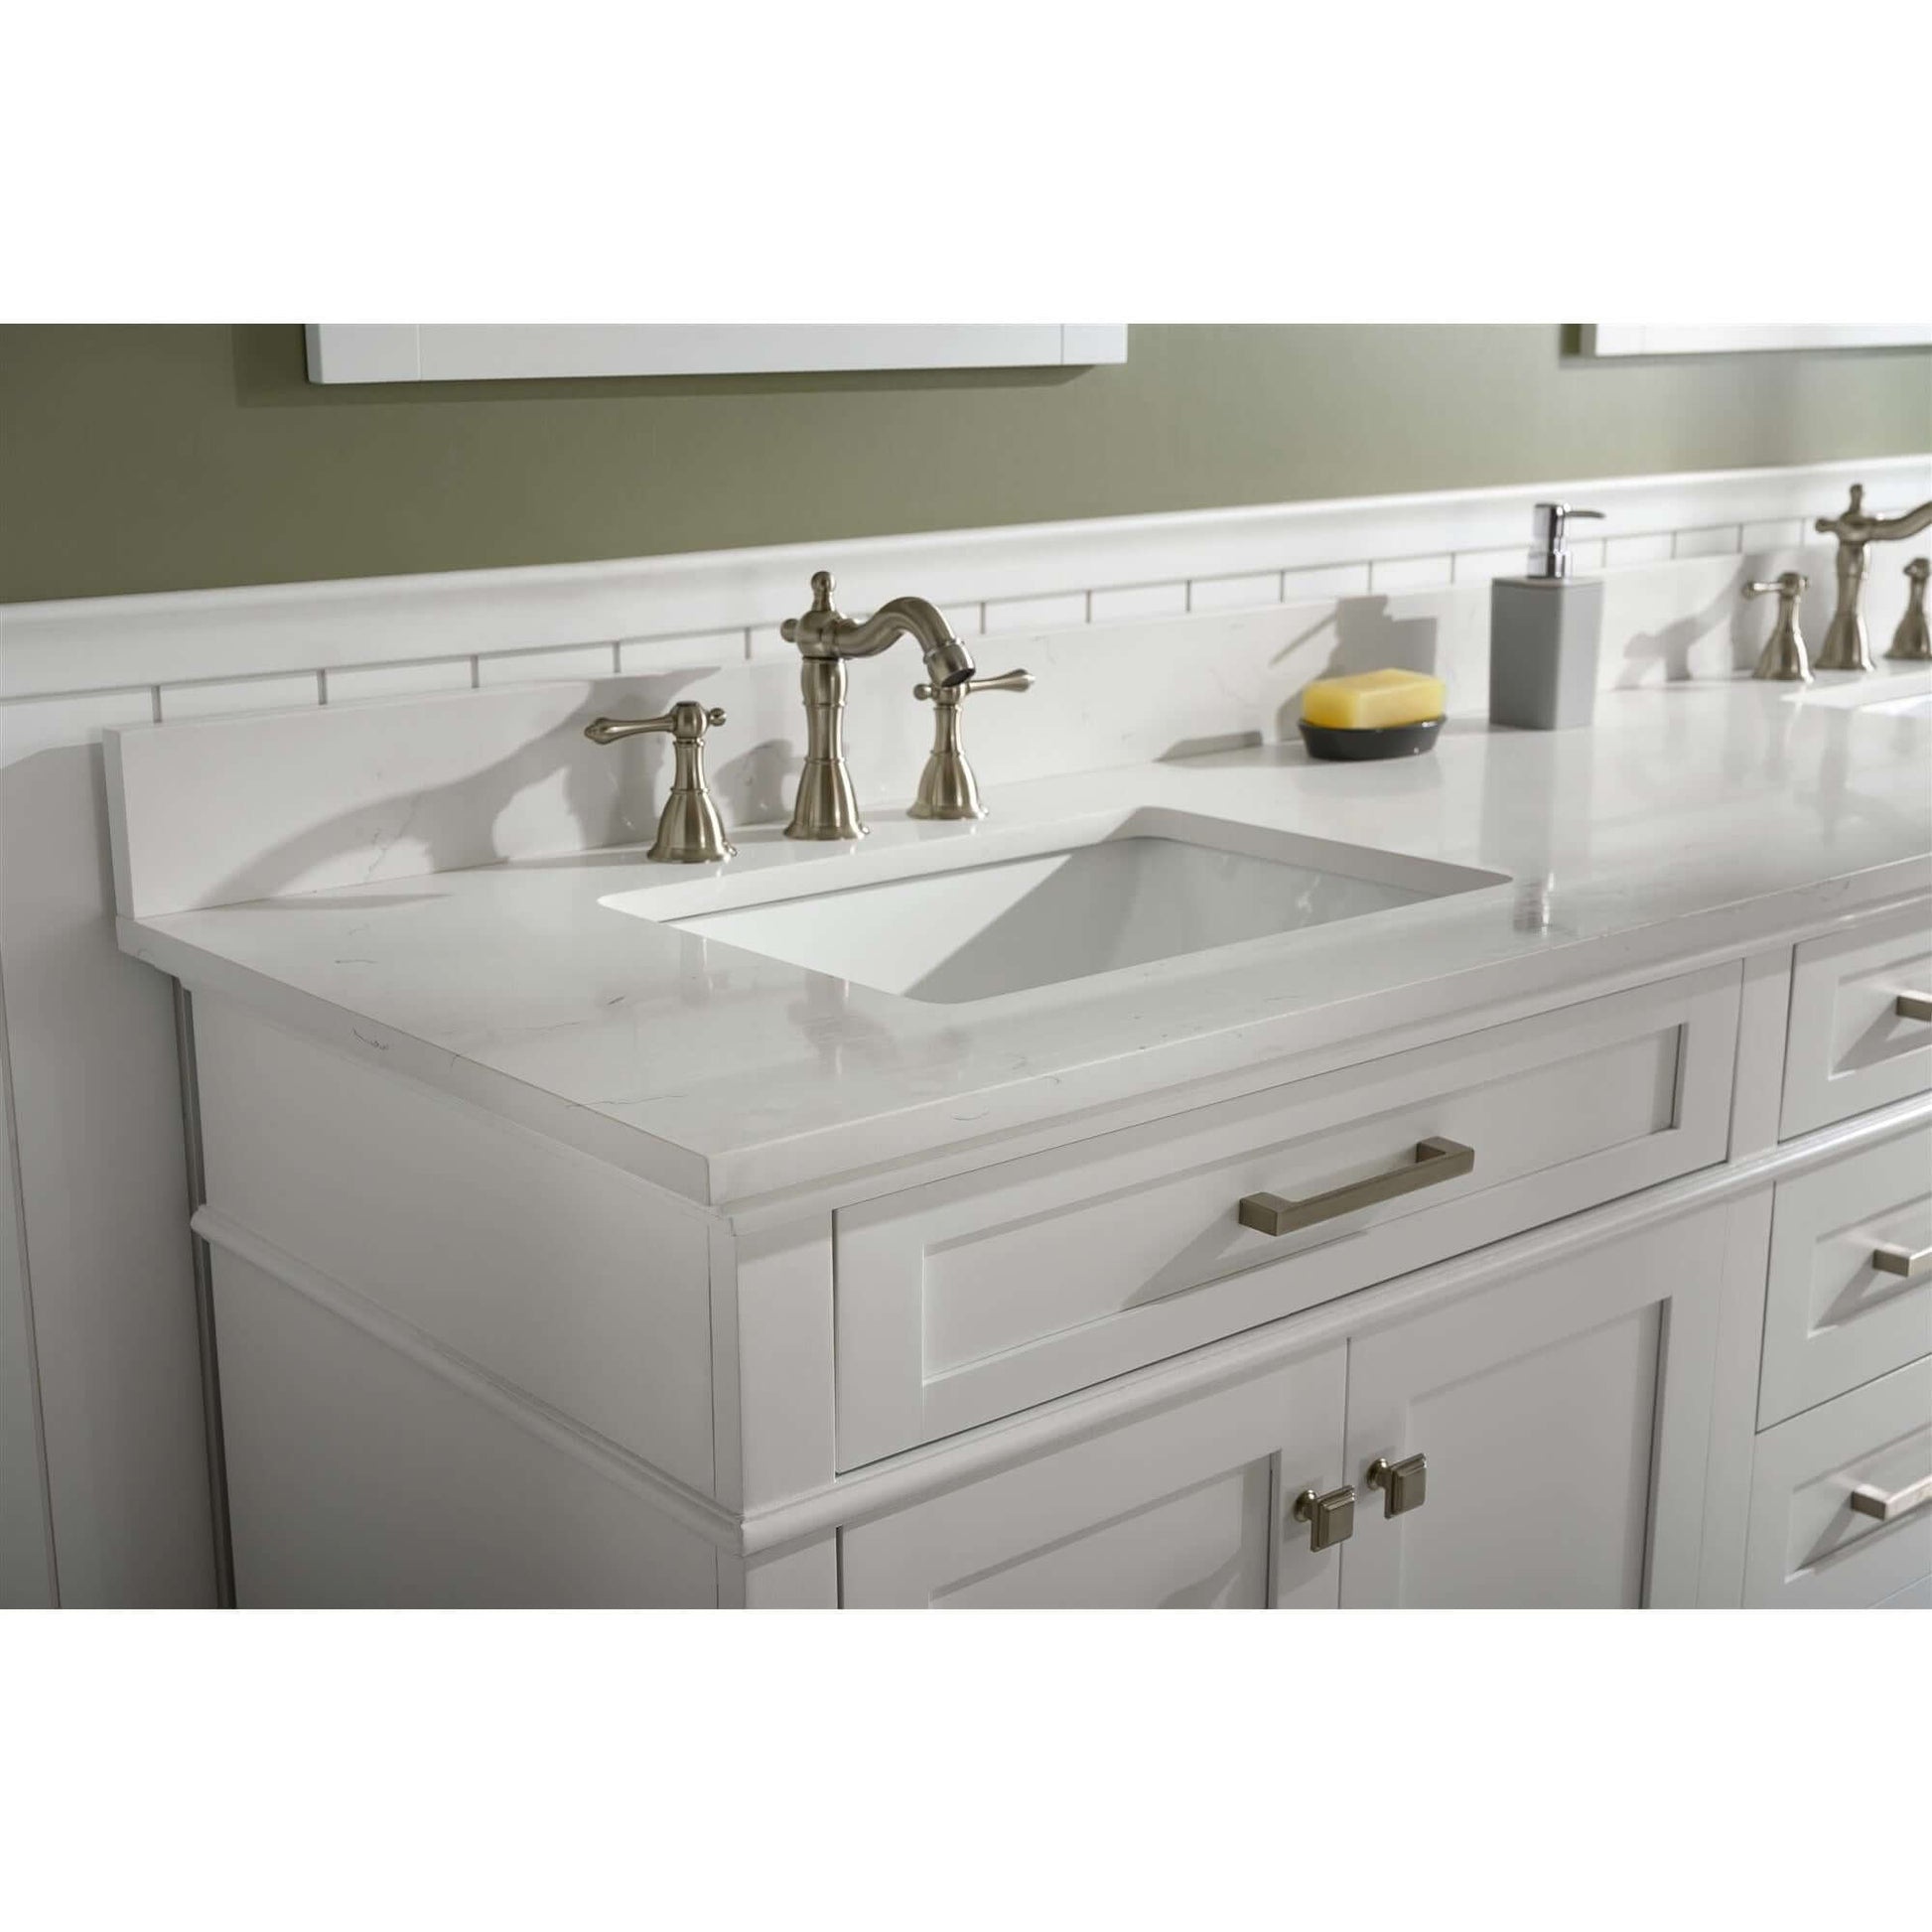 80" White Double Single Sink Vanity Cabinet With Carrara White Quartz Top Wlf2280-Cw-Qz - WLF2280-W